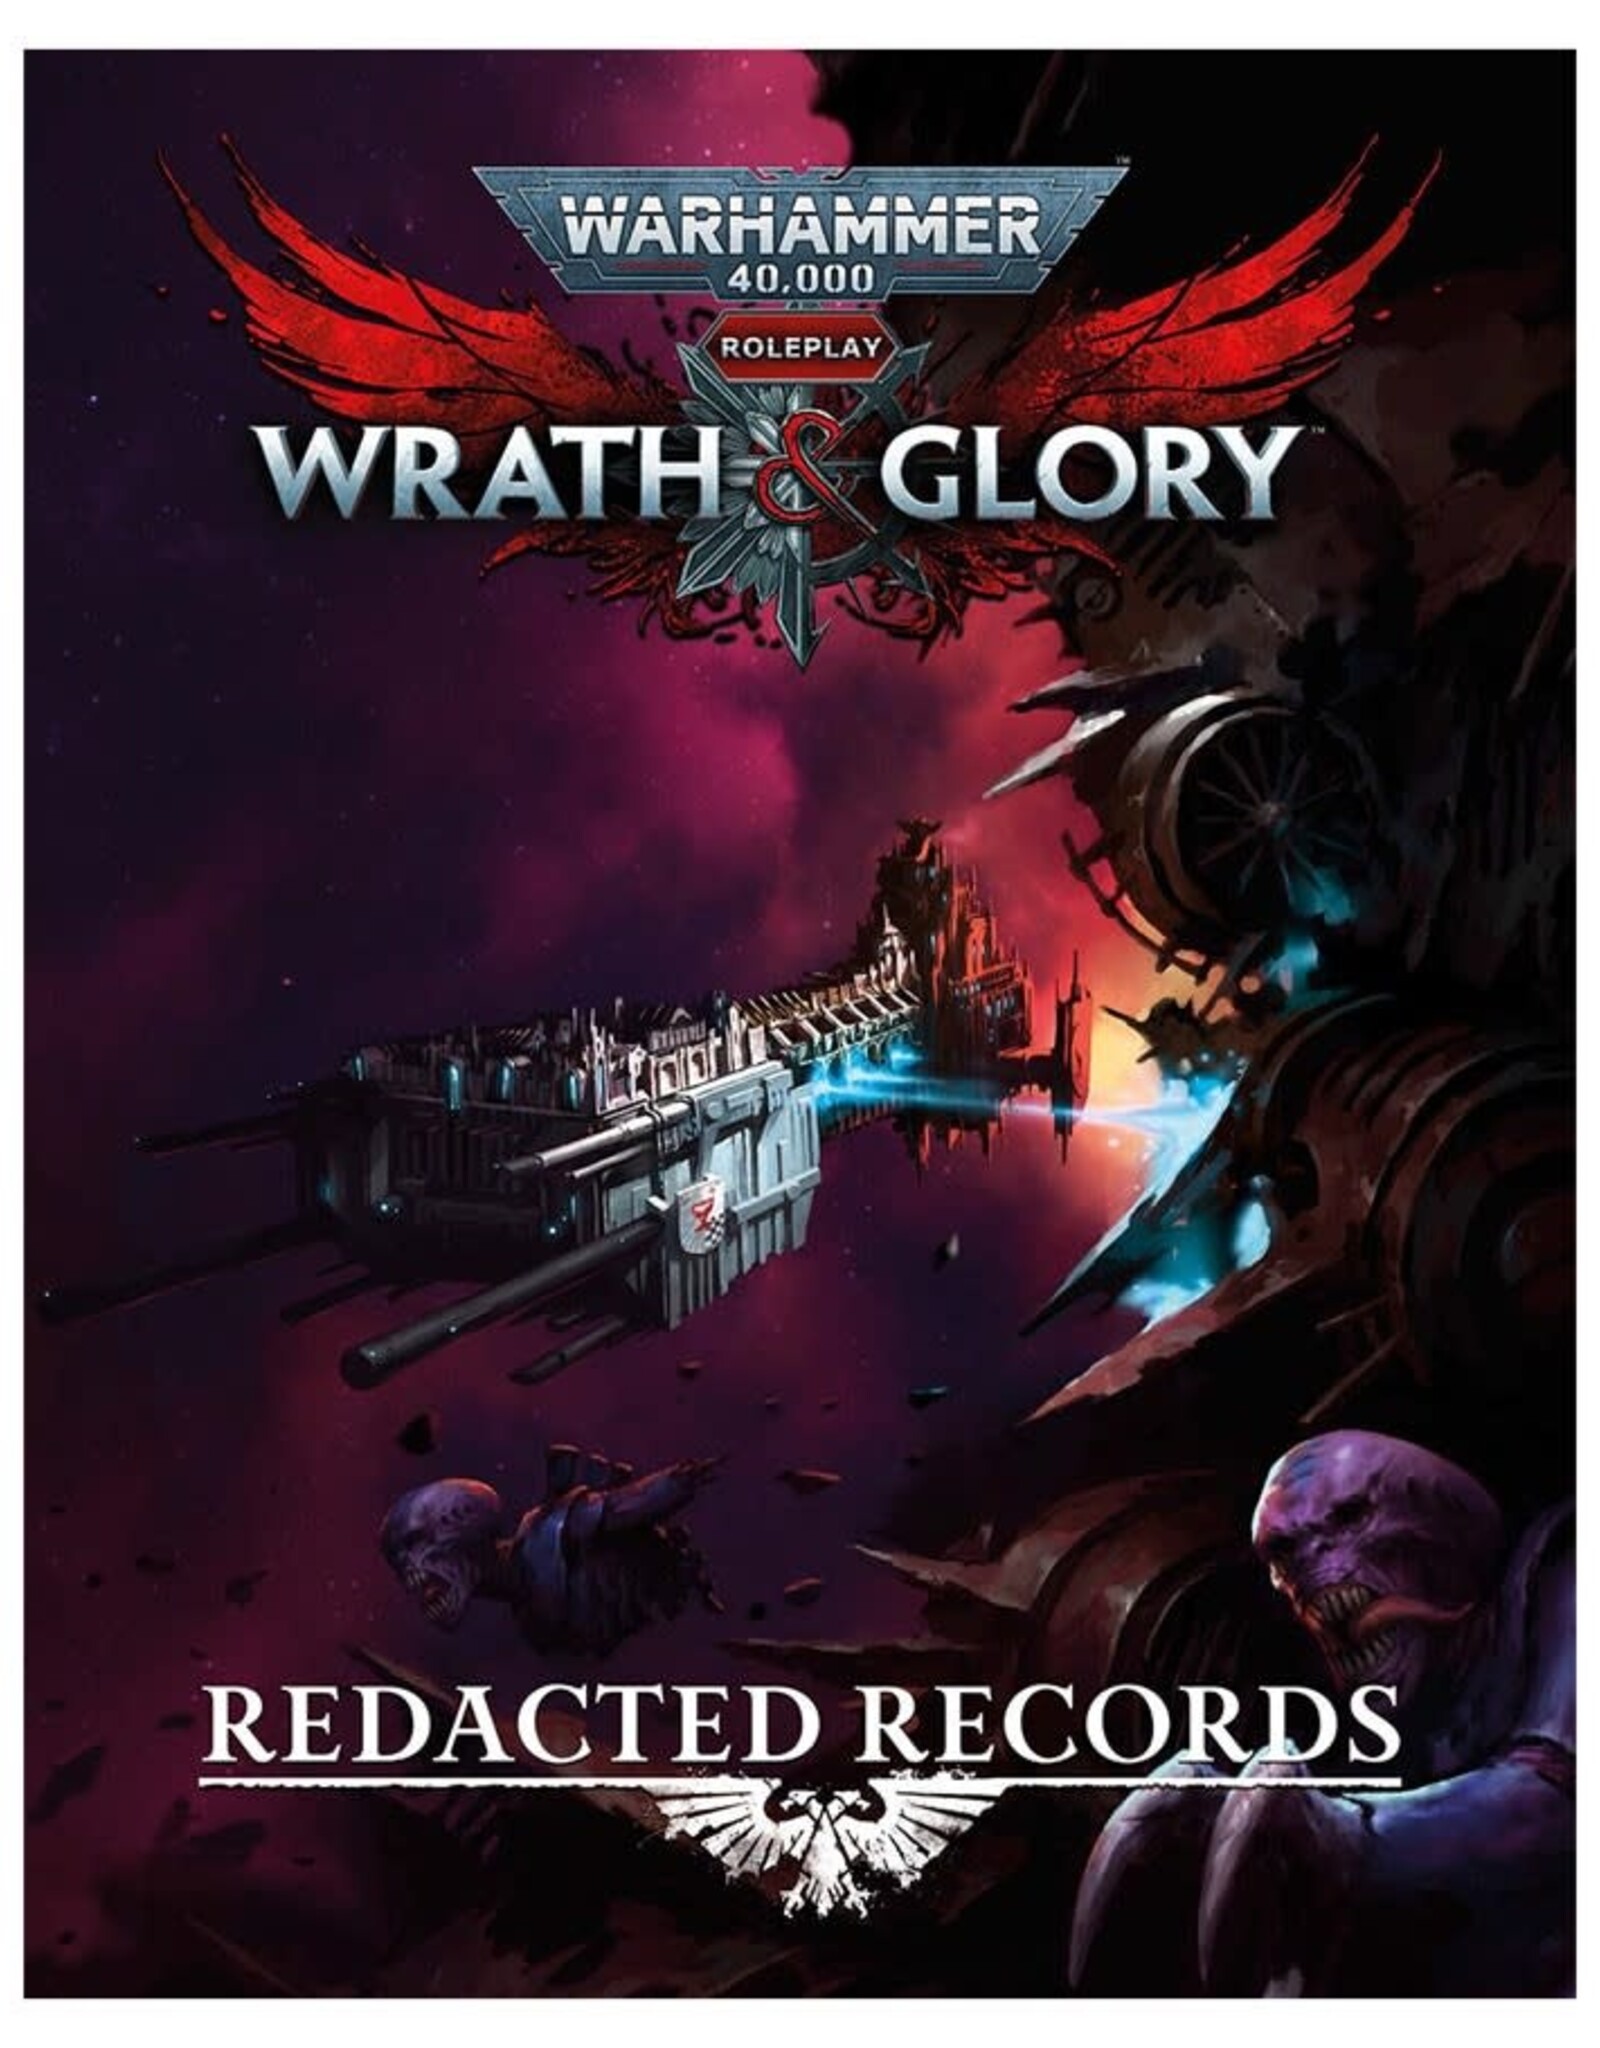 Cubicle 7 Entertainment Ltd Warhammer 40K Wrath & Glory RPG: Redacted Records